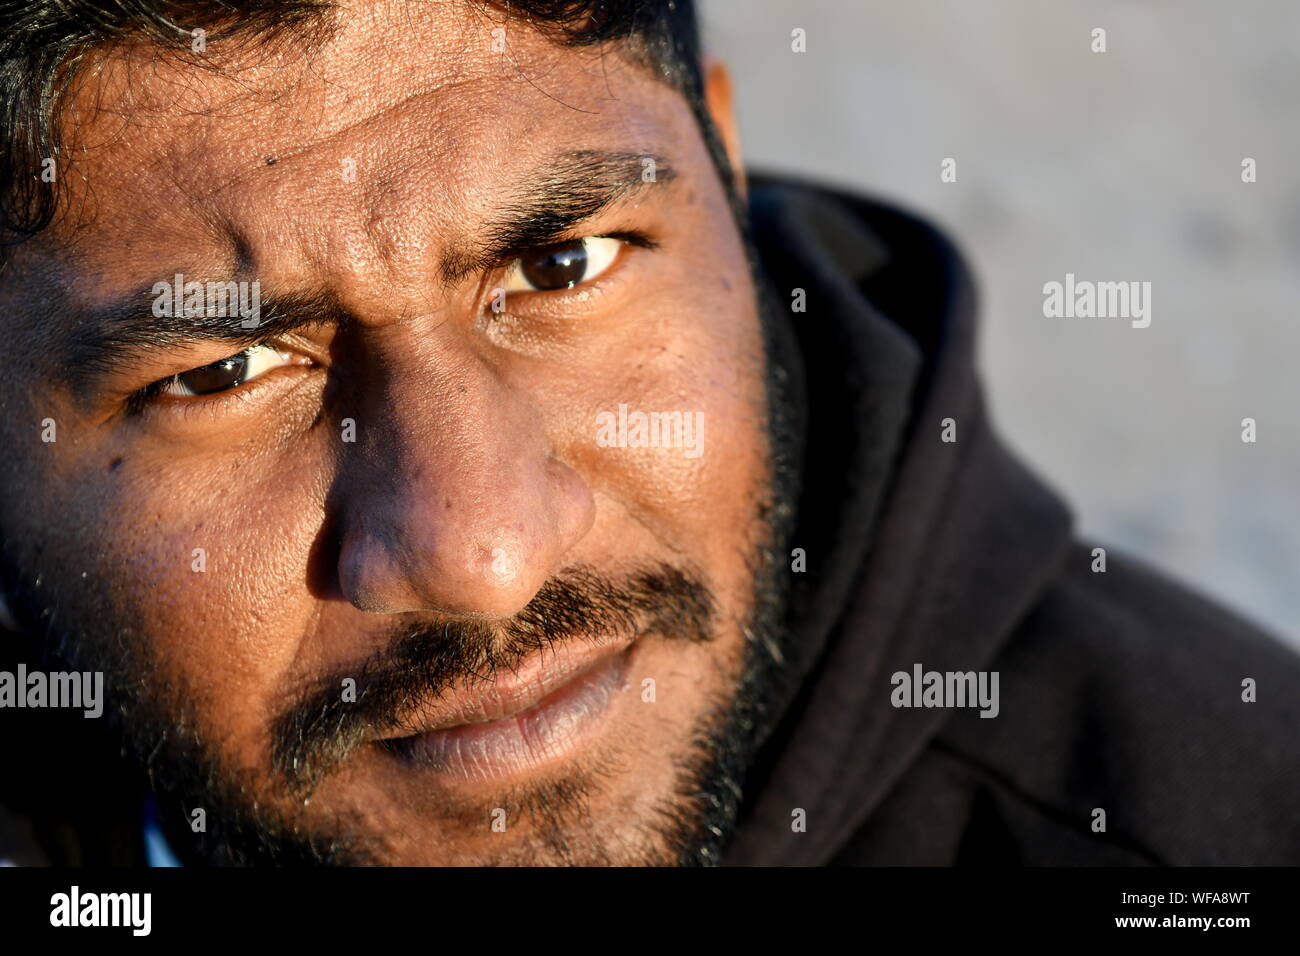 Saudi man portrait hi-res stock photography and images - Alamy